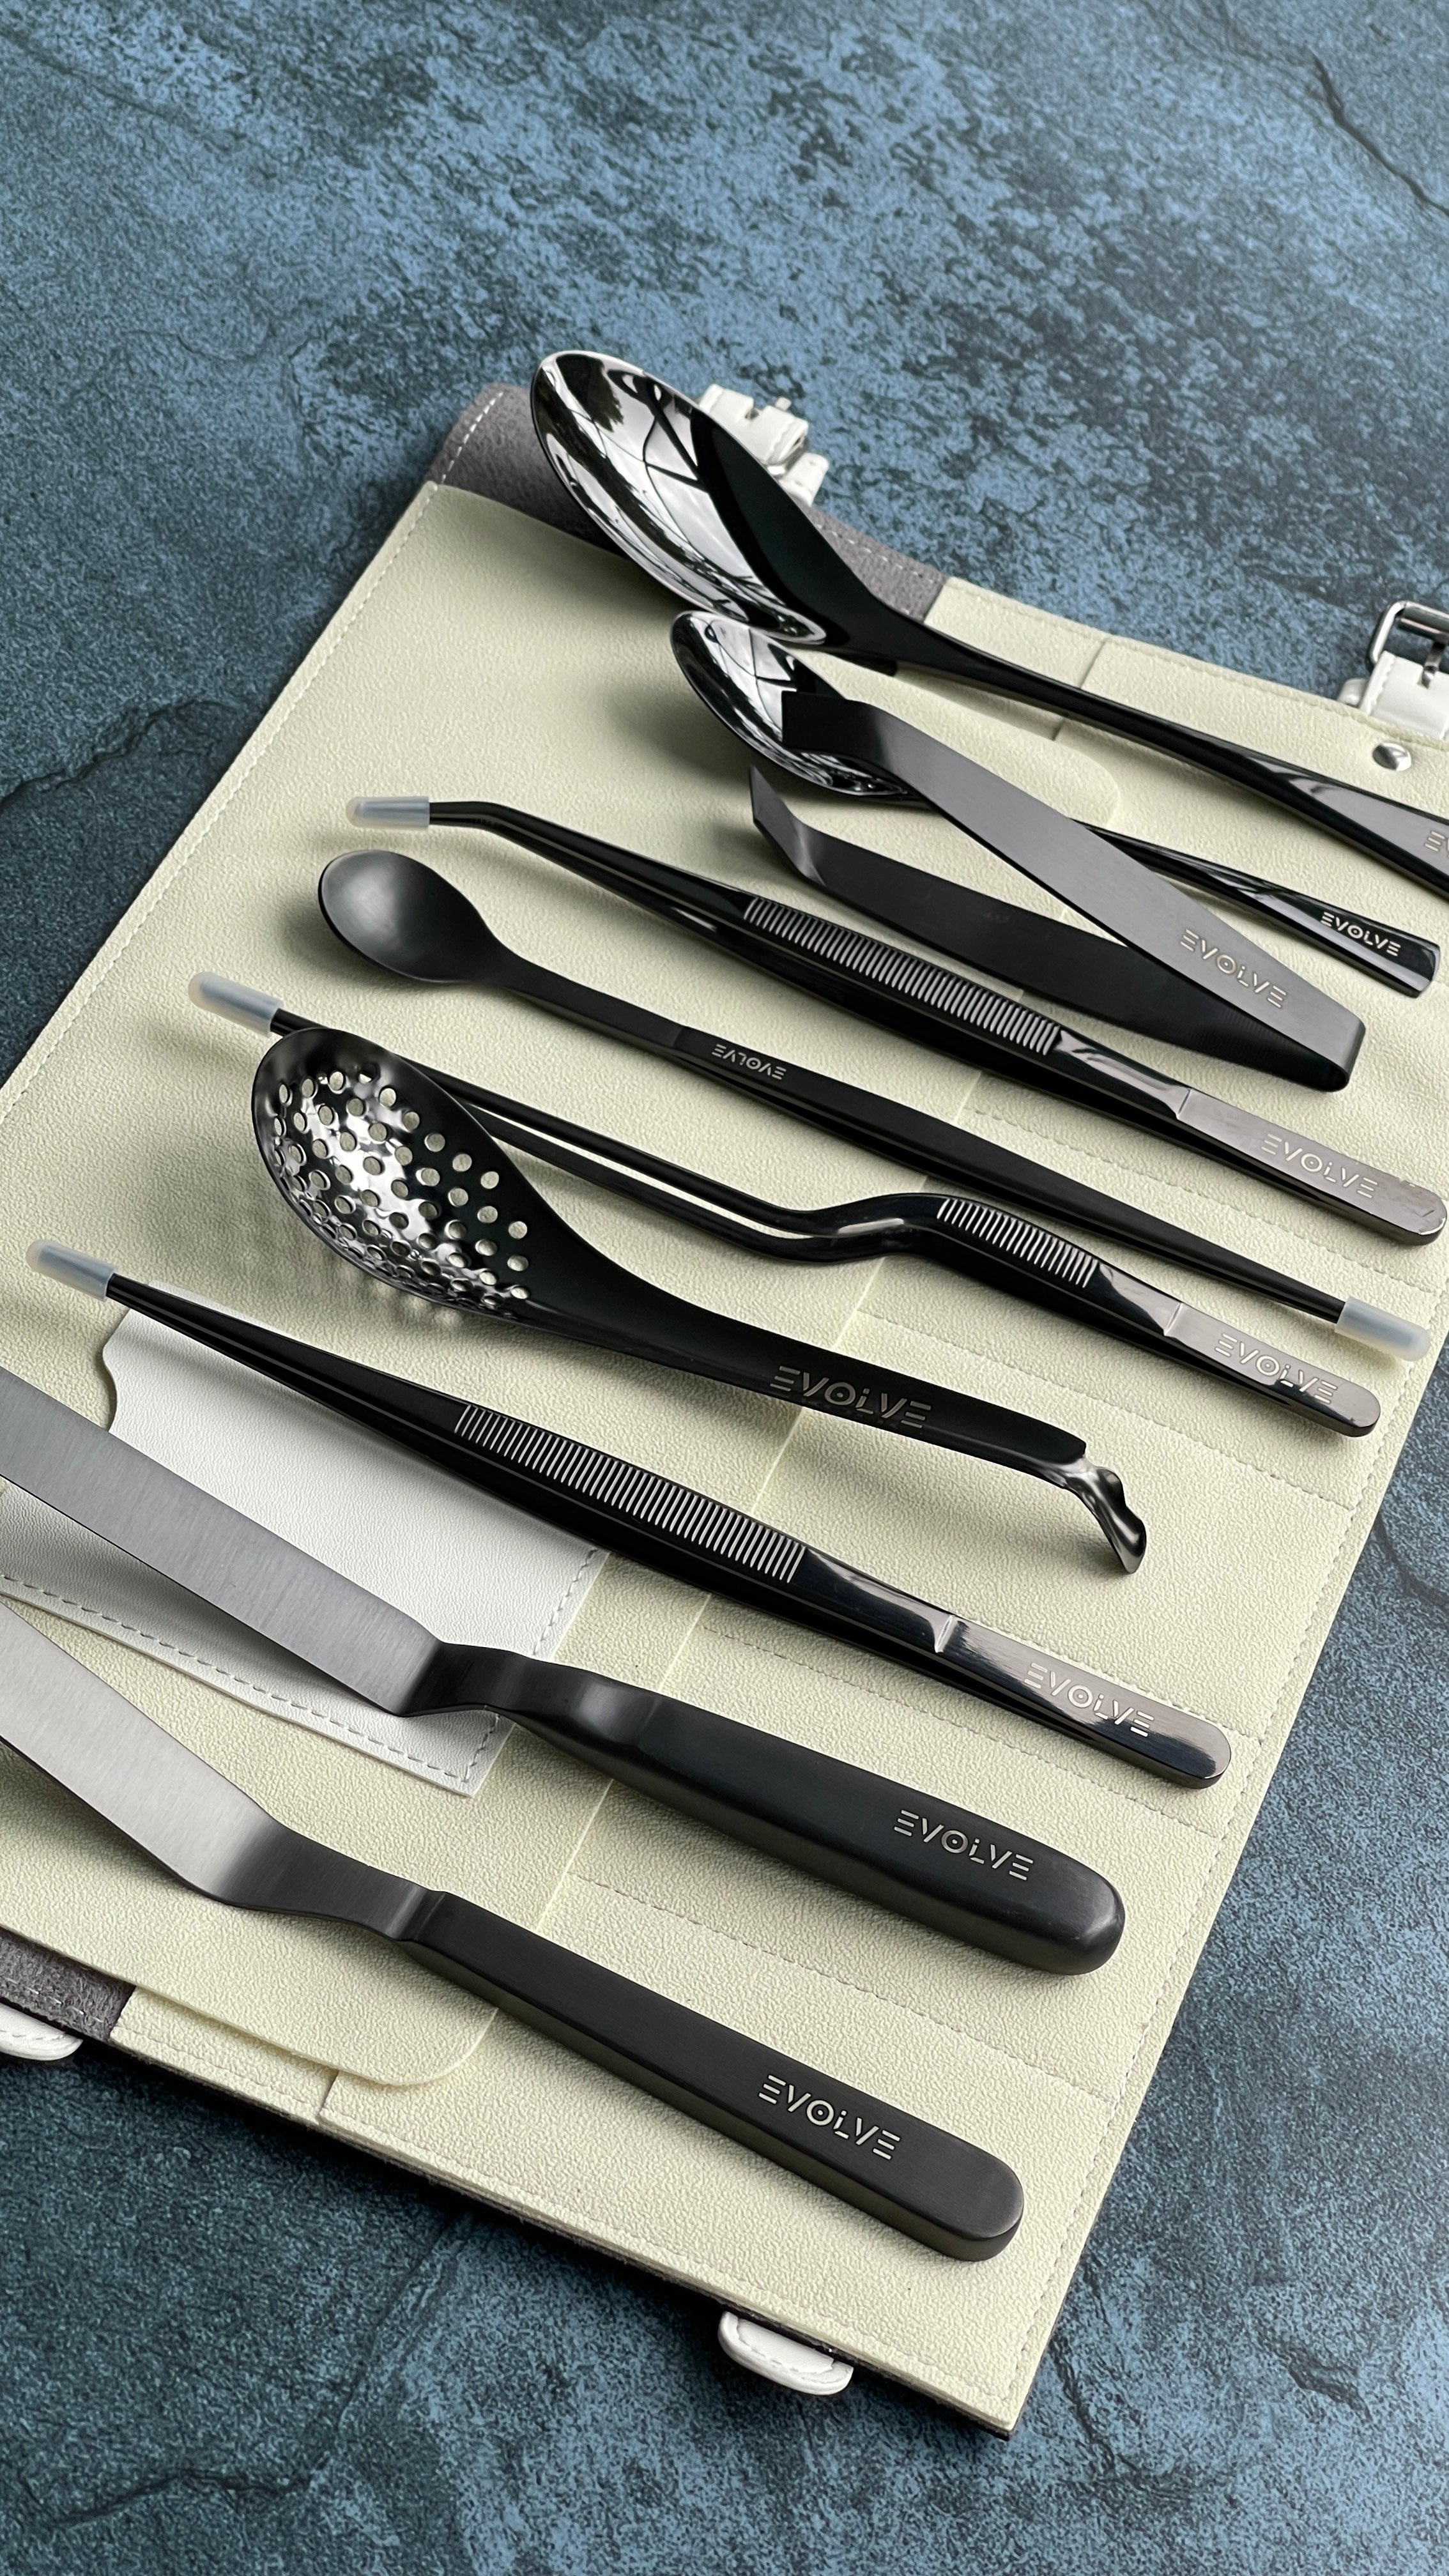 Kit utensili per la cucina - ChefClub